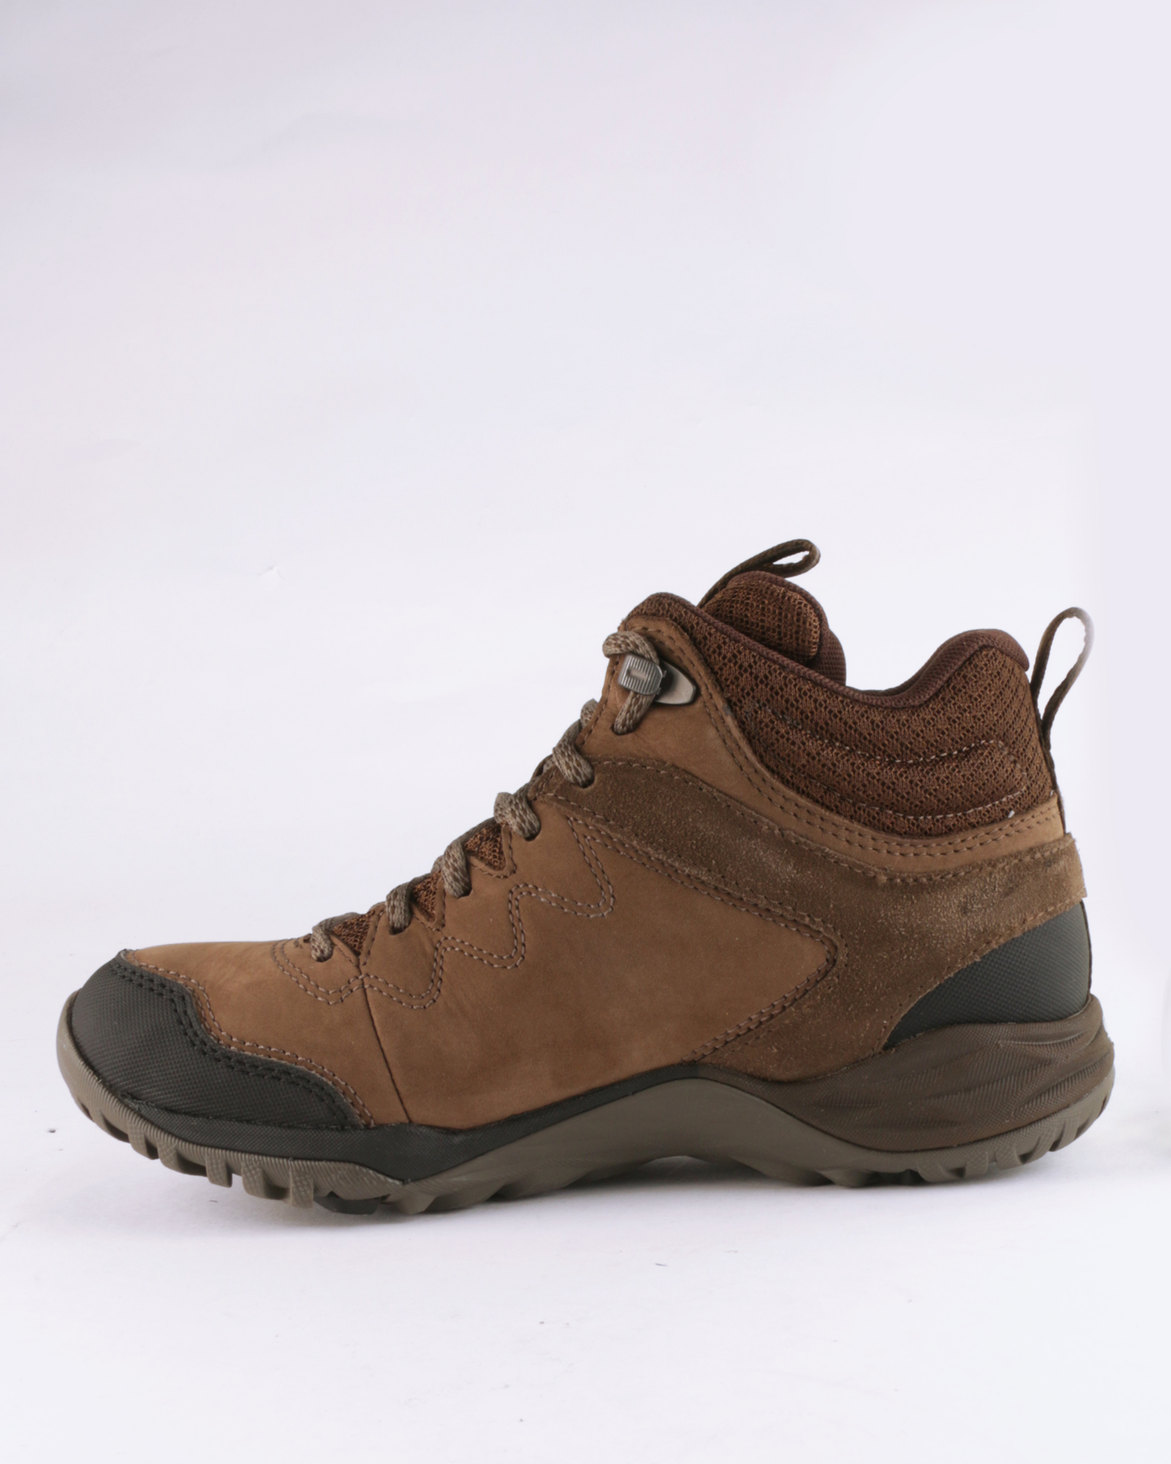 Merrell Siren Traveller Q2 Mid Waterproof Hiking Boots Slate./Black | Zando